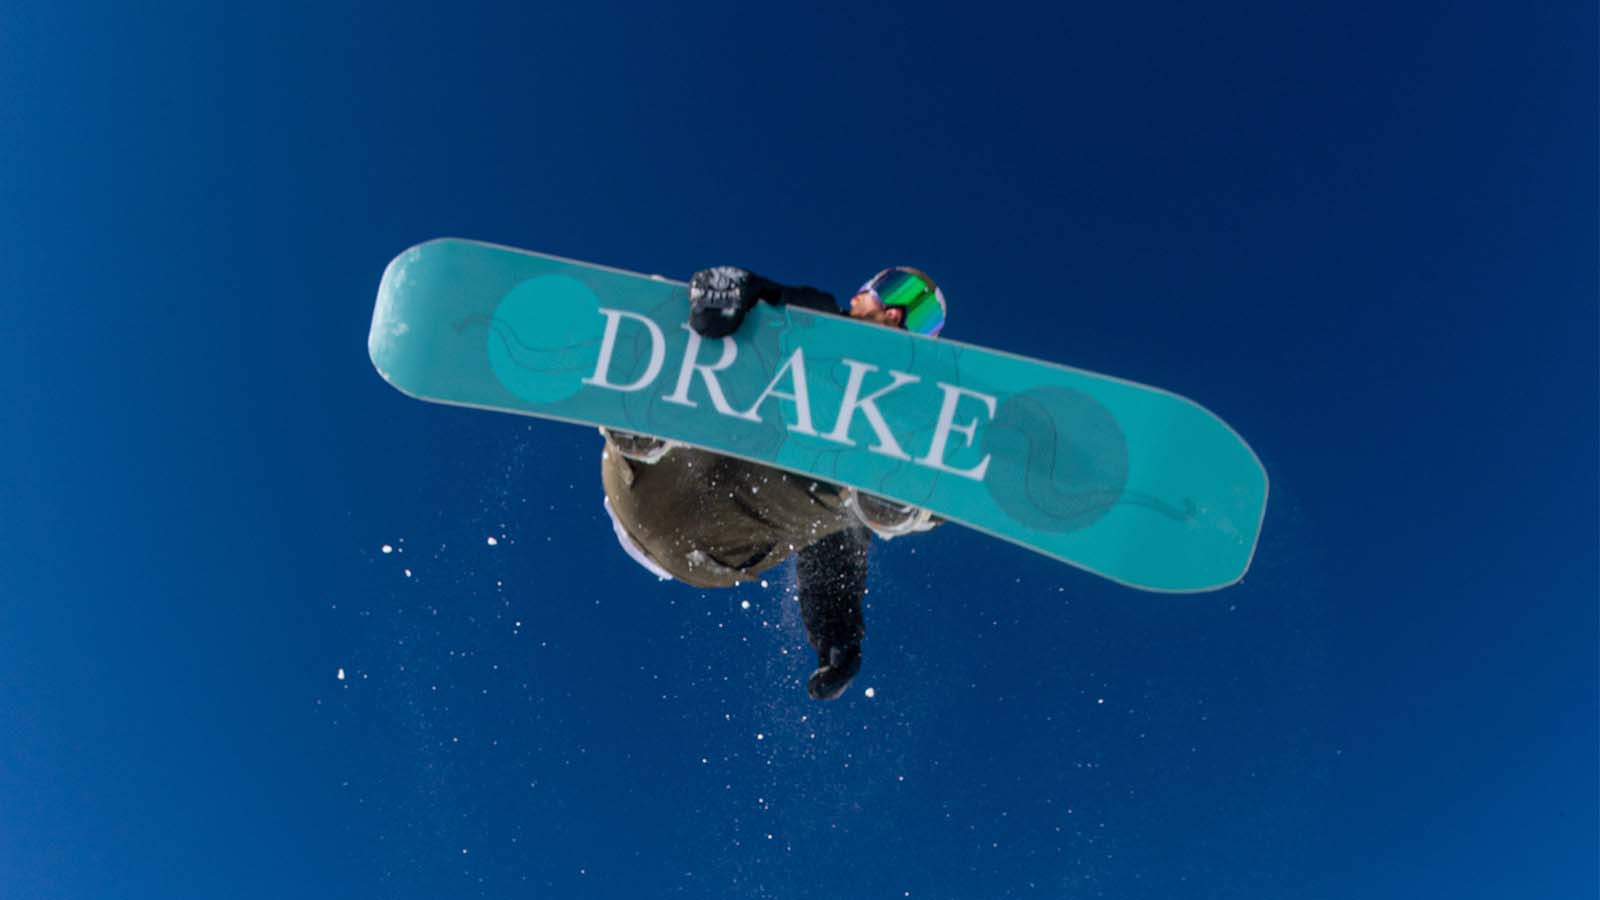 Shaun White Skateboarding - Next Gen Featurette 2 